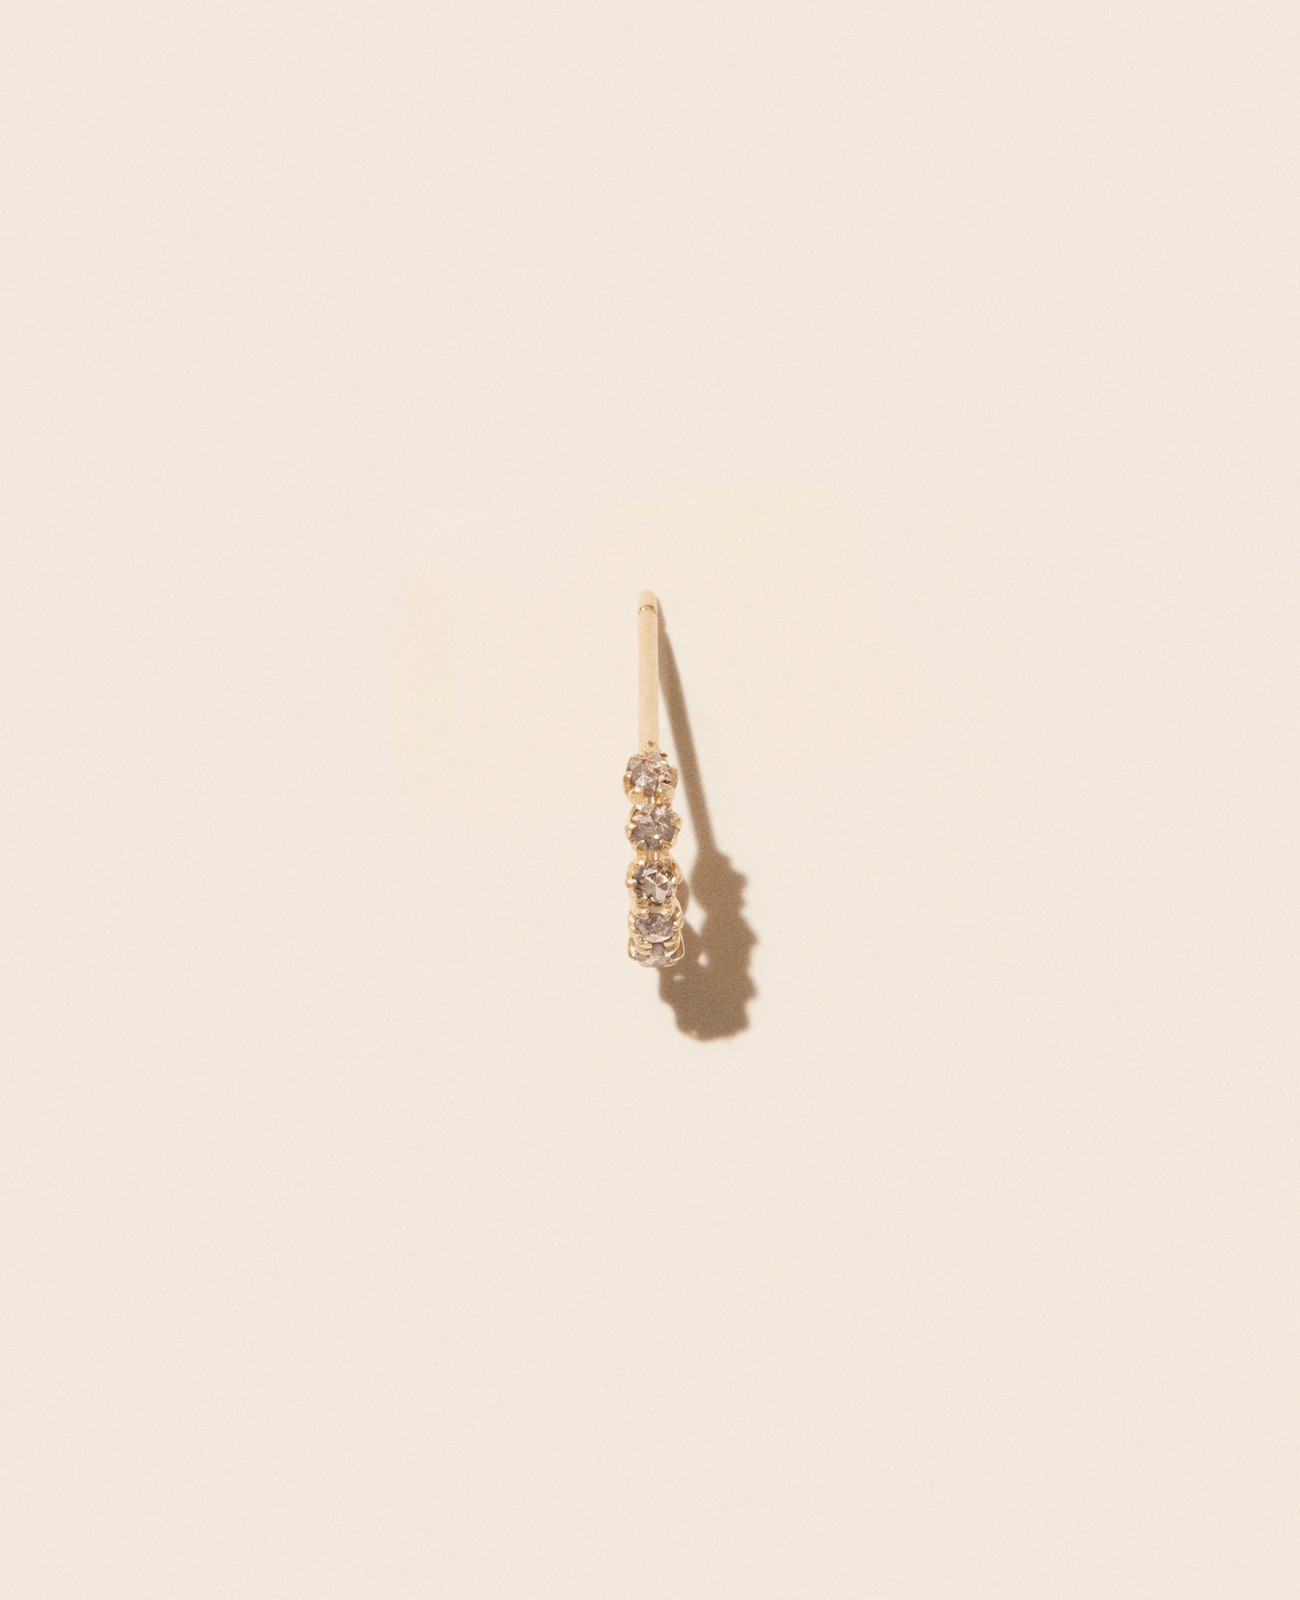 AVA DIAMAOND earring pascale monvoisin jewelry paris